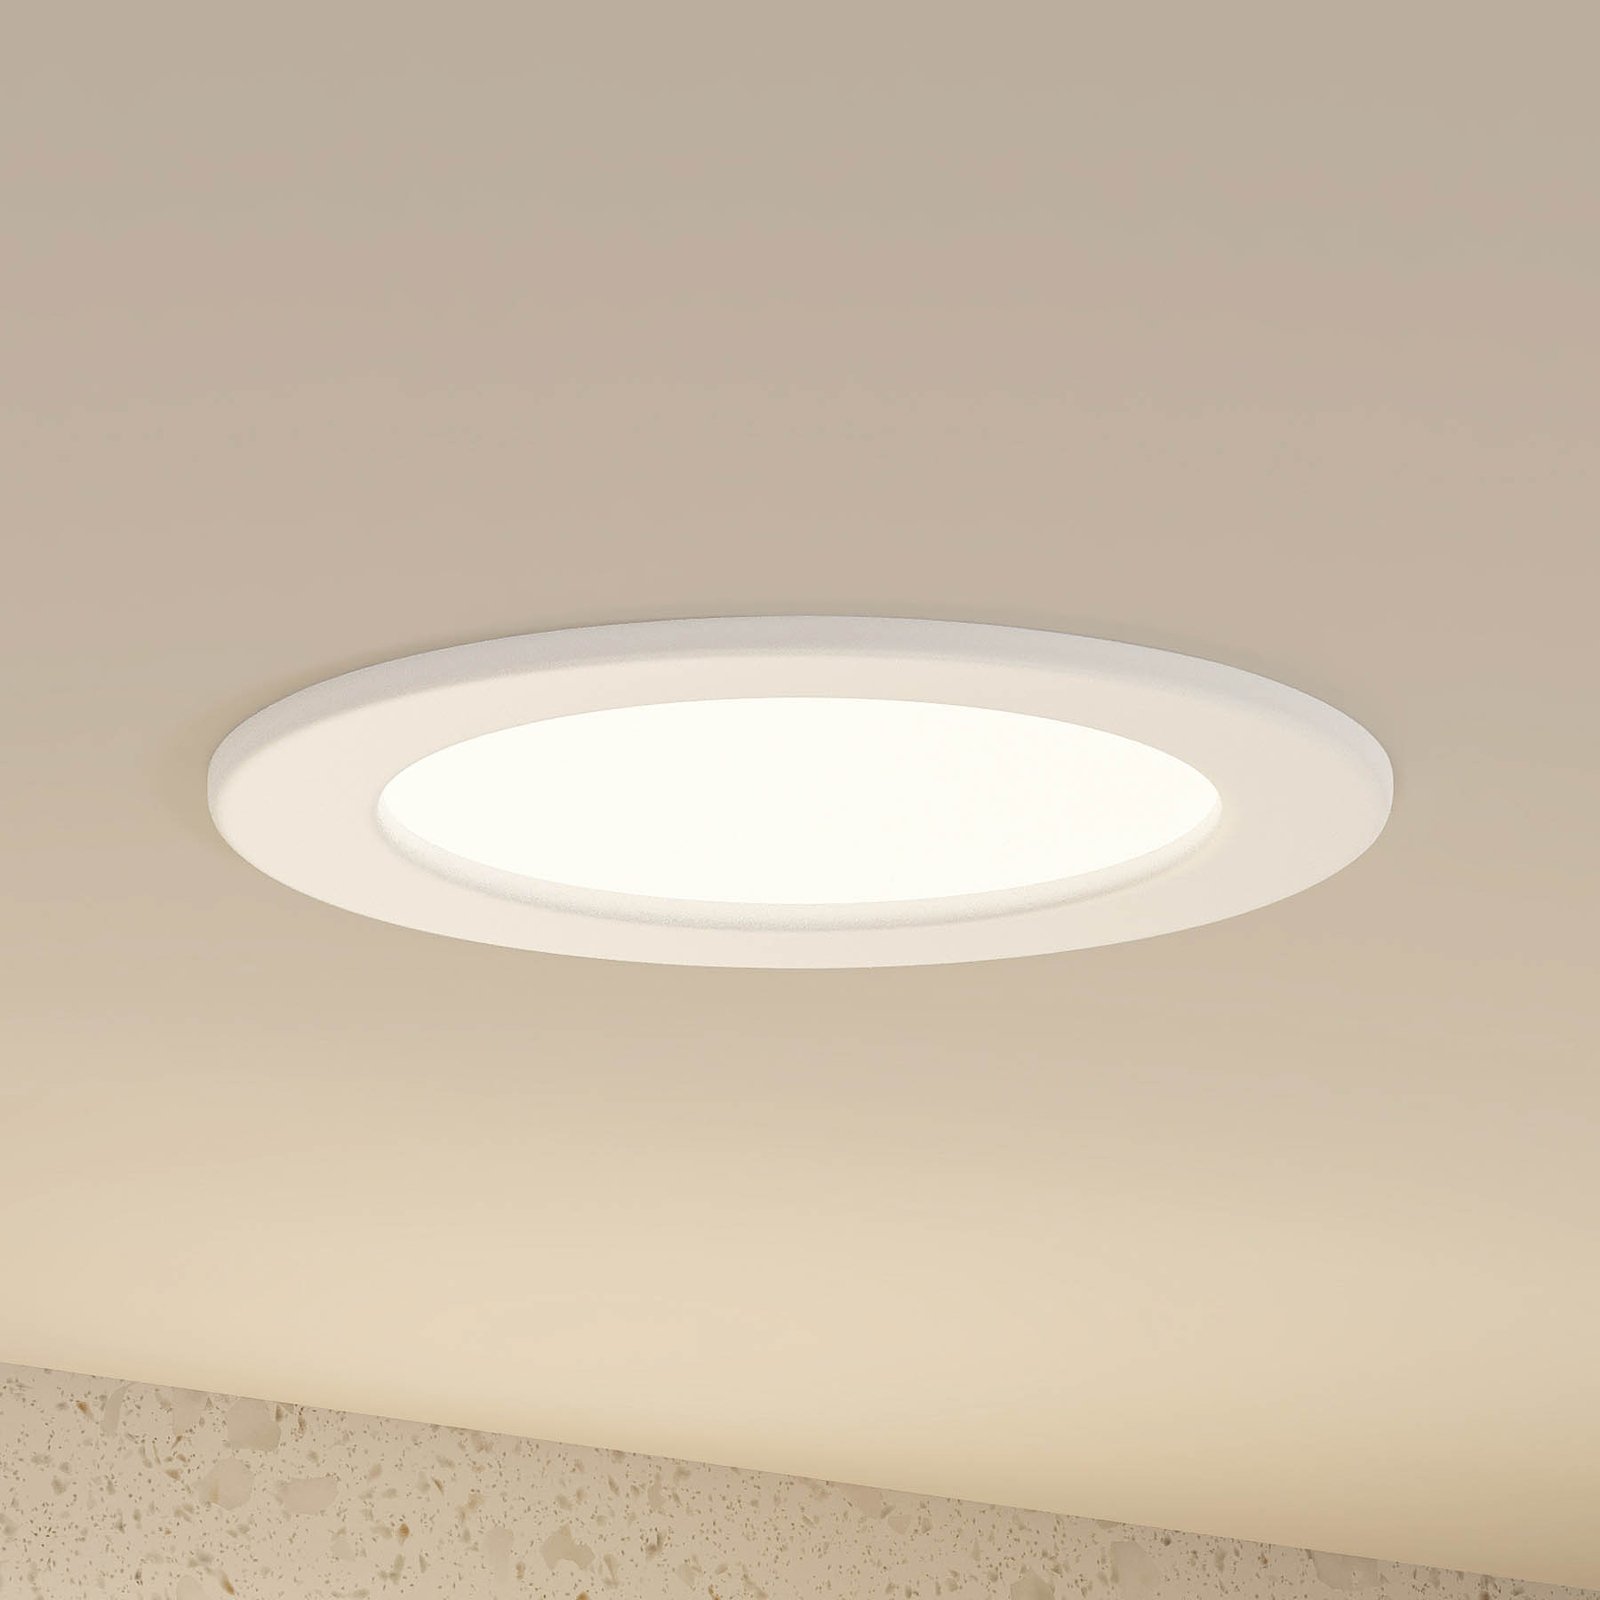 Prios Cadance LED inbouwlamp, wit, 17 cm